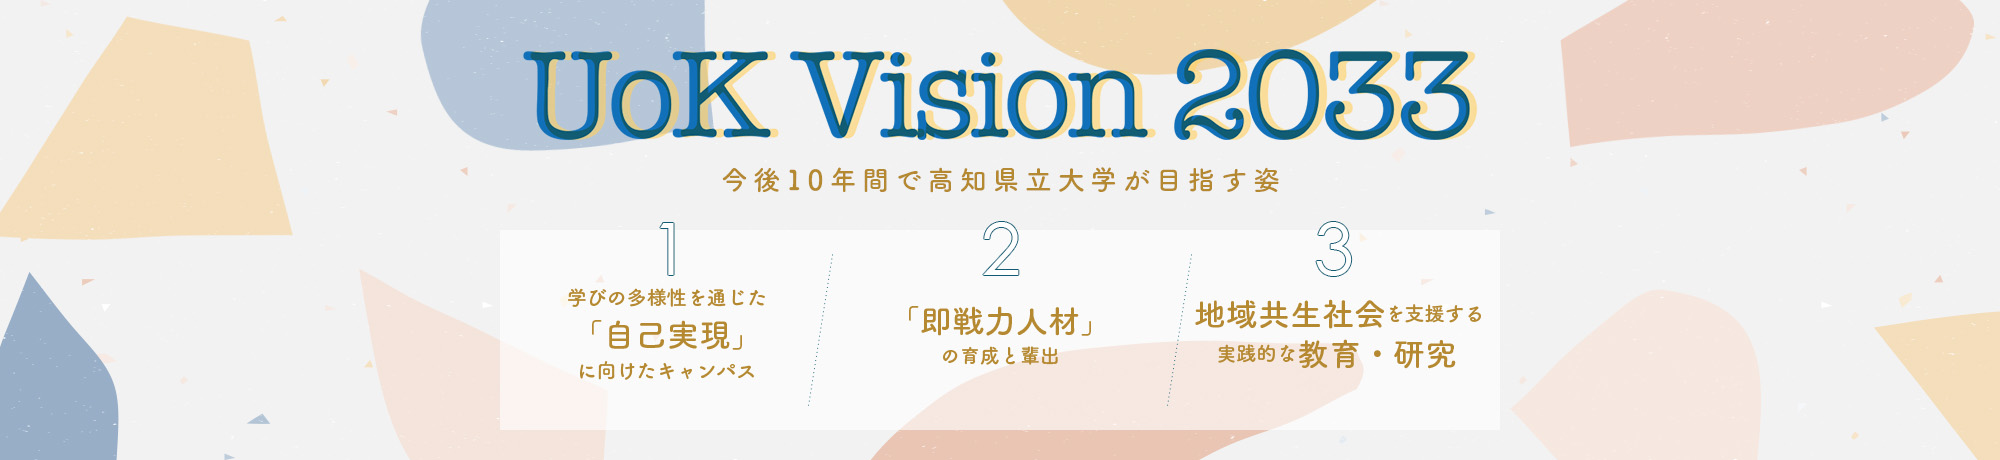 UoK Vision 2033